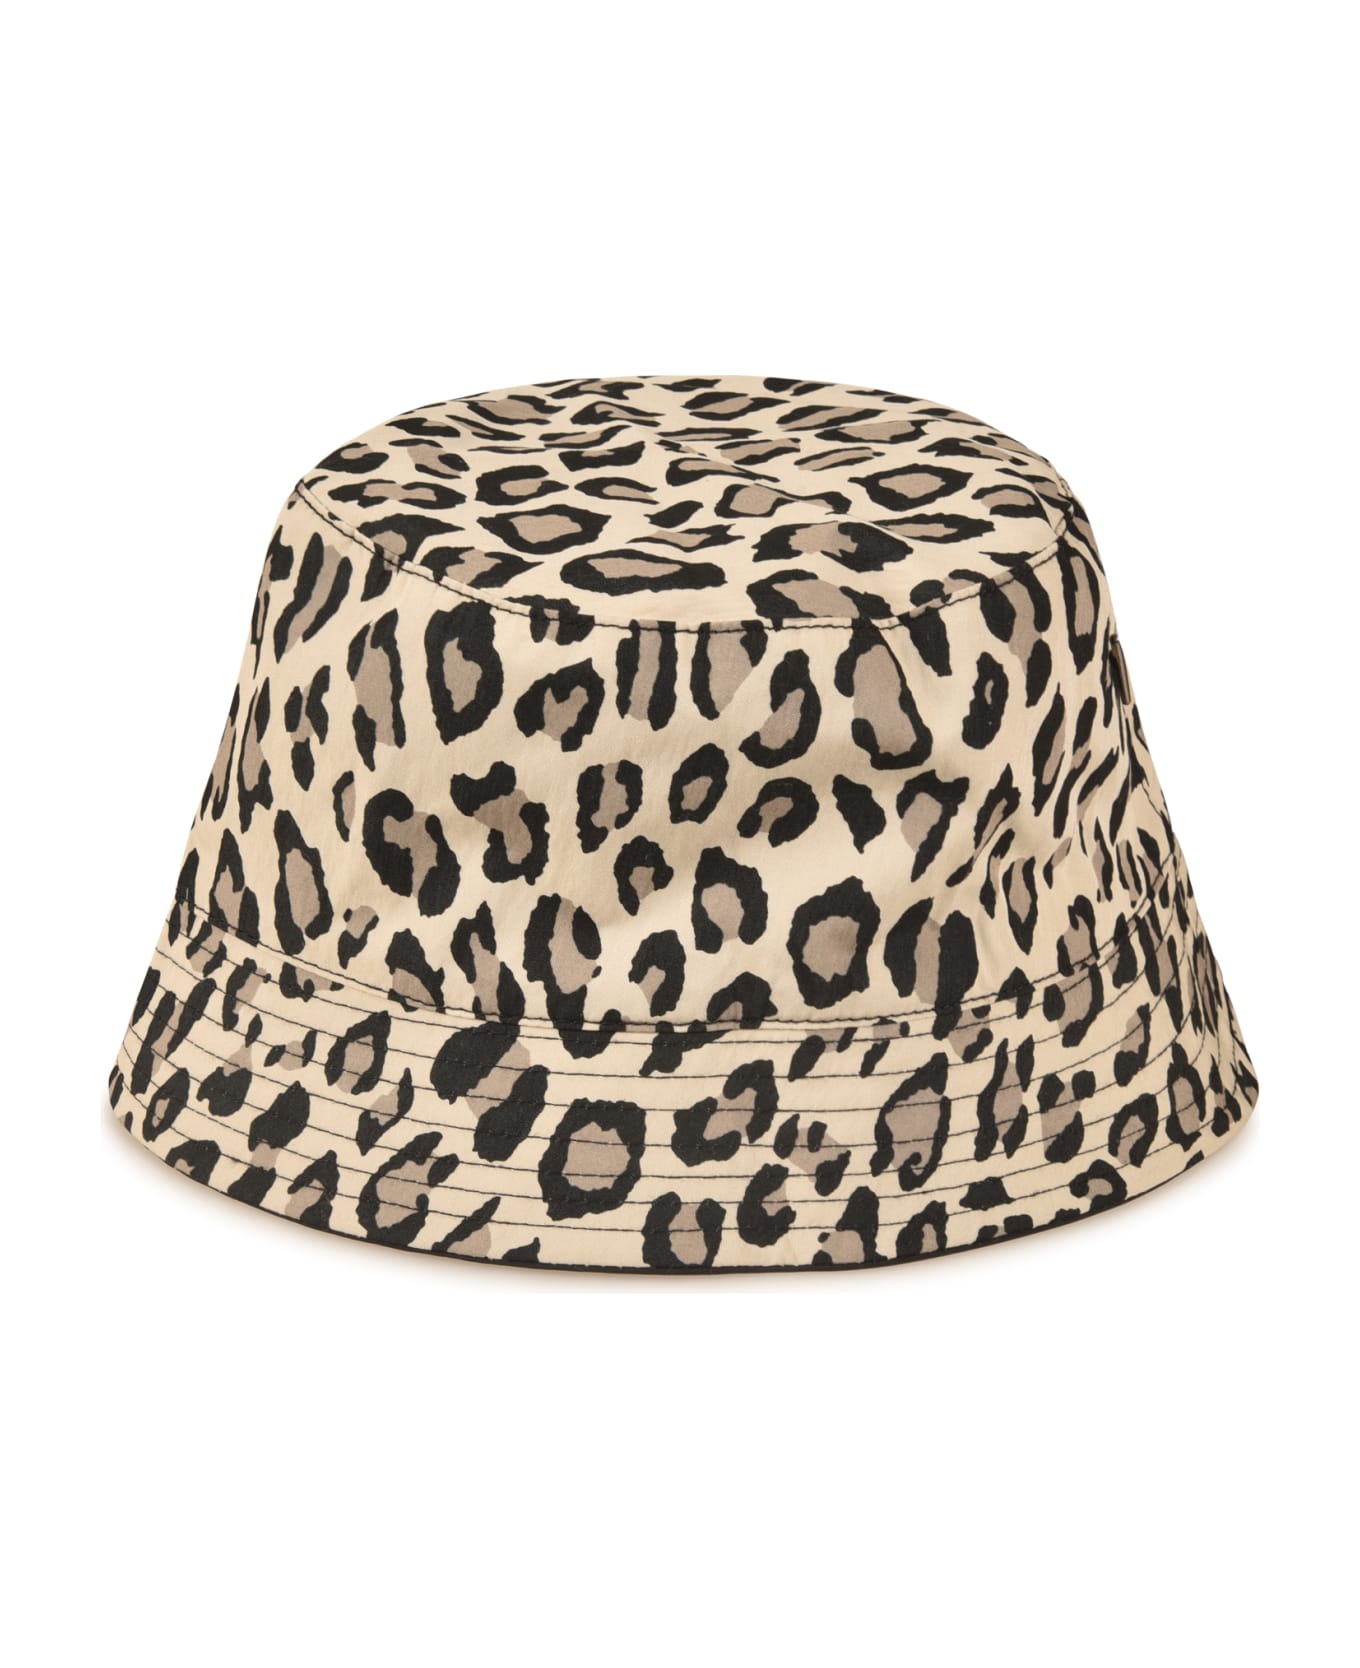 VIS A VIS Leopard Print Bucket Hat - Leopard